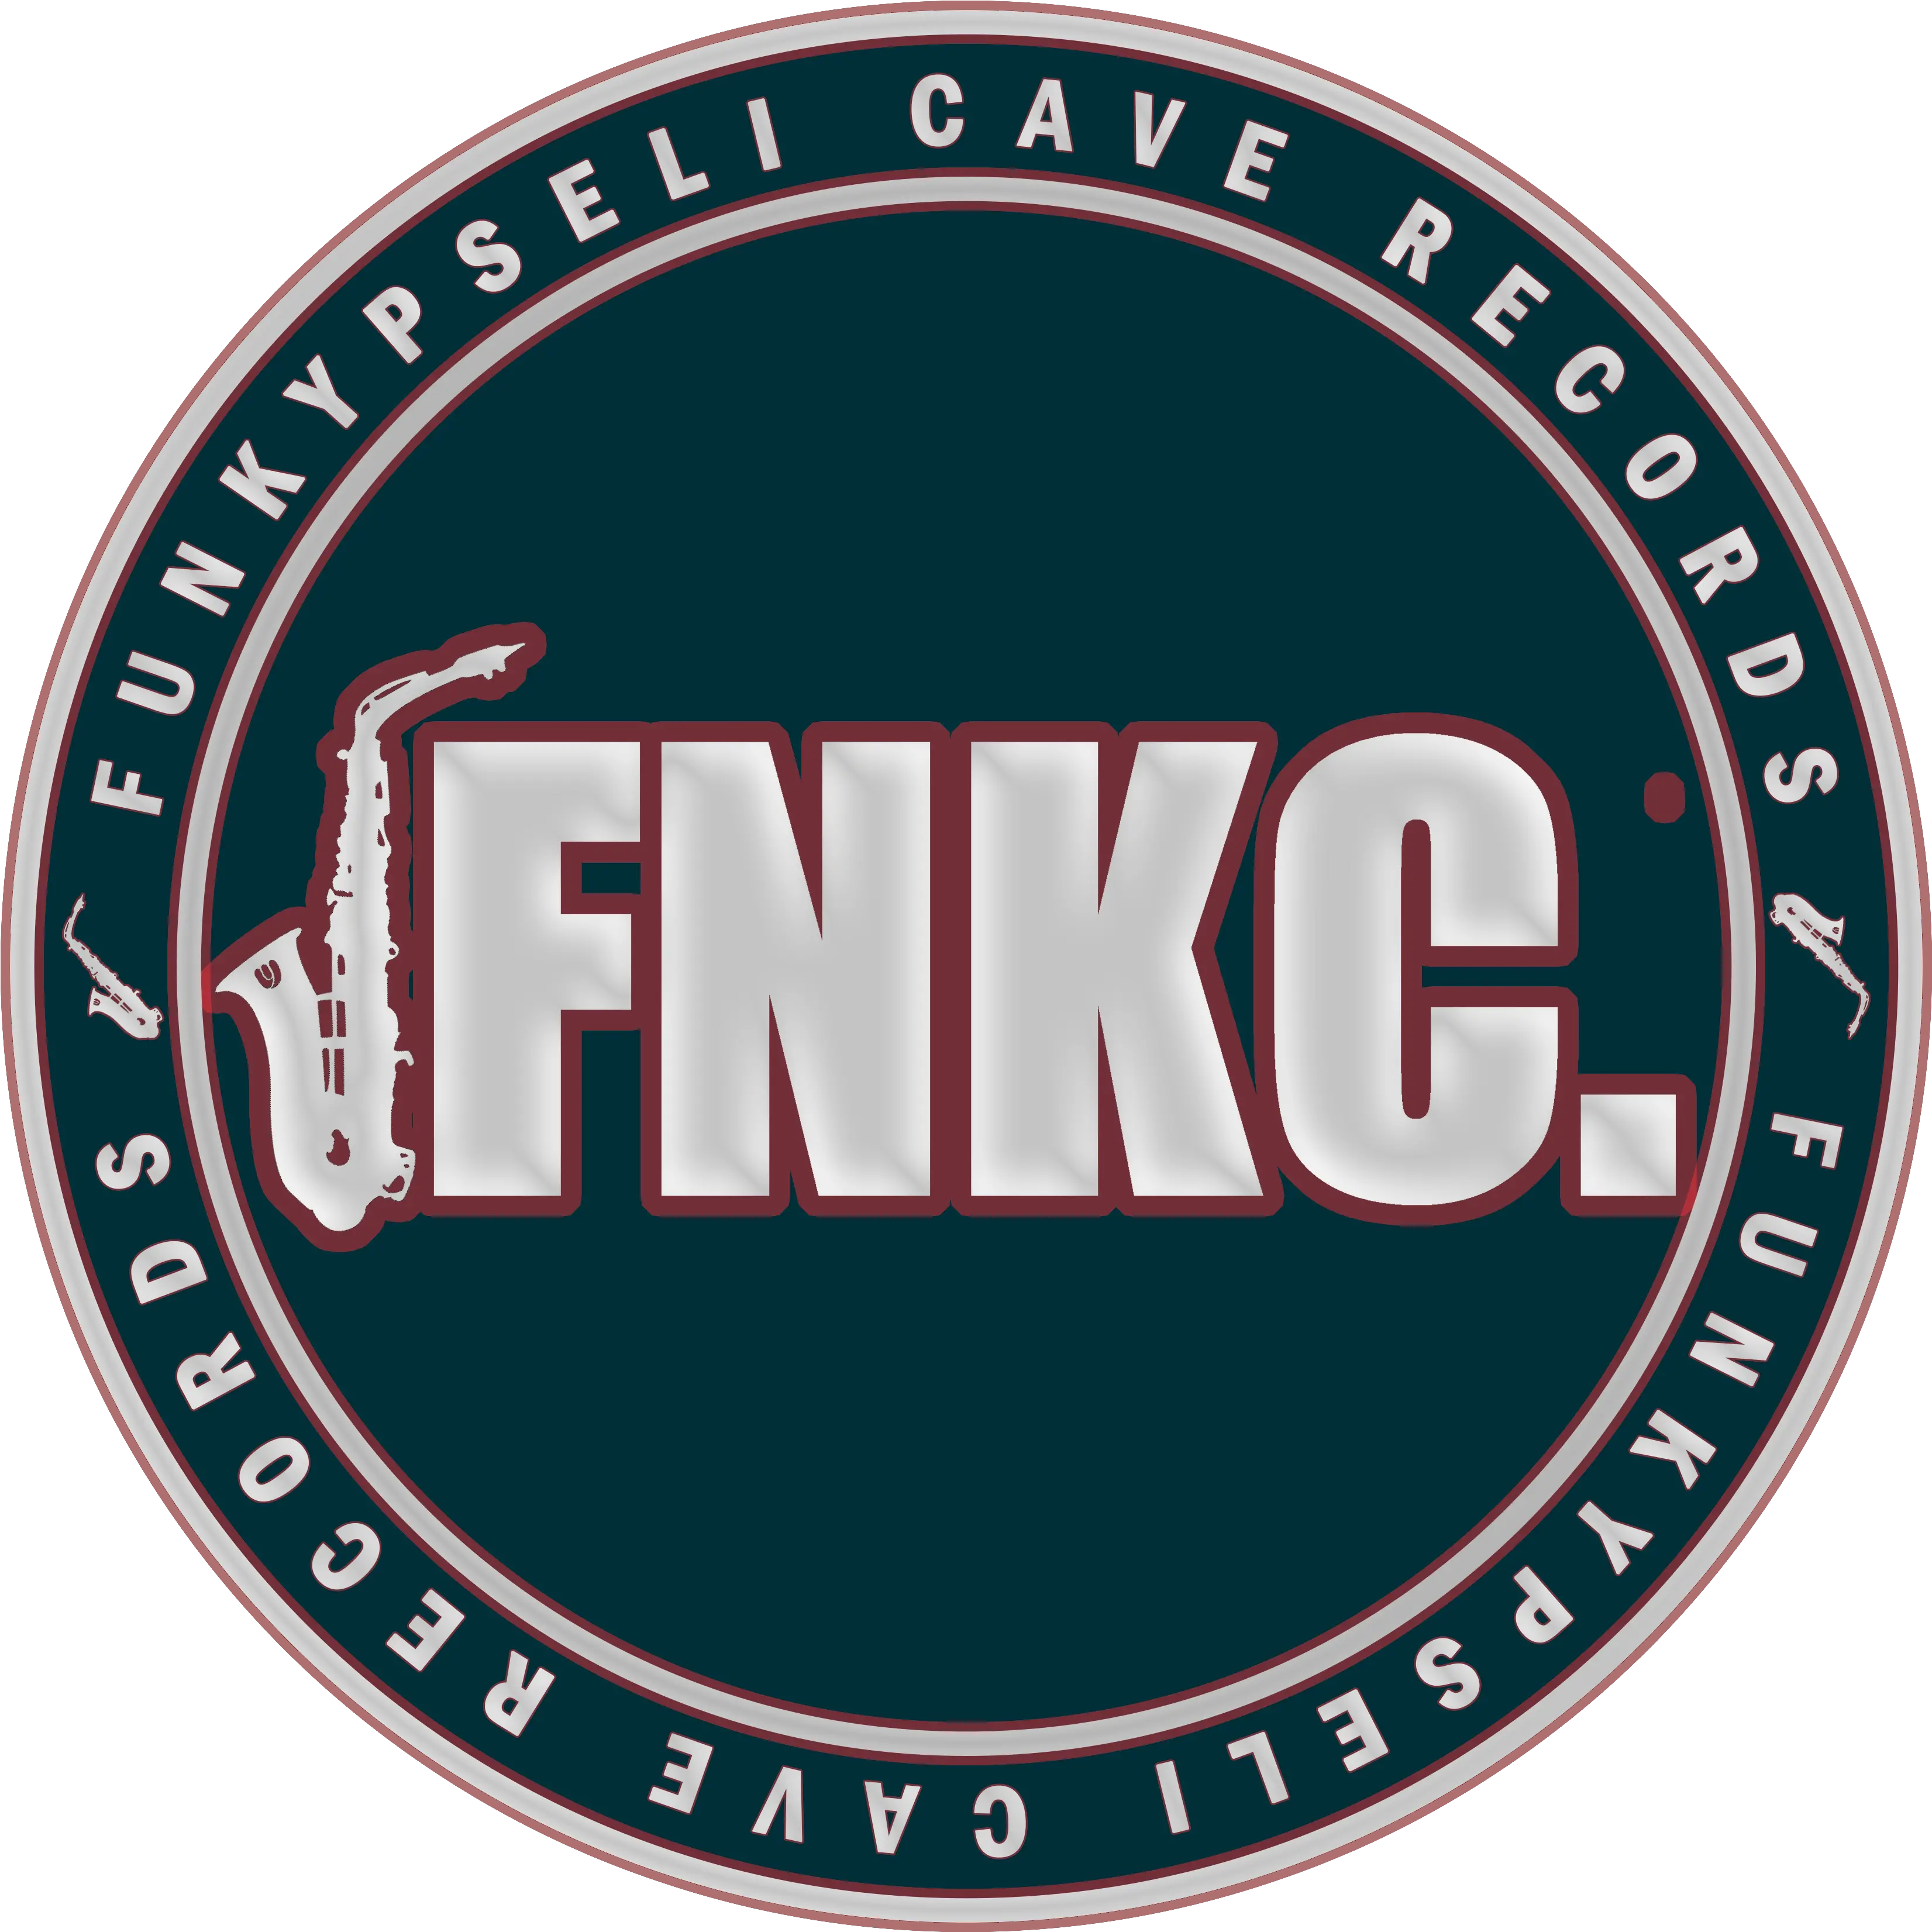 Funkypseli Cave U2014 Home Mba Png Fn Logo